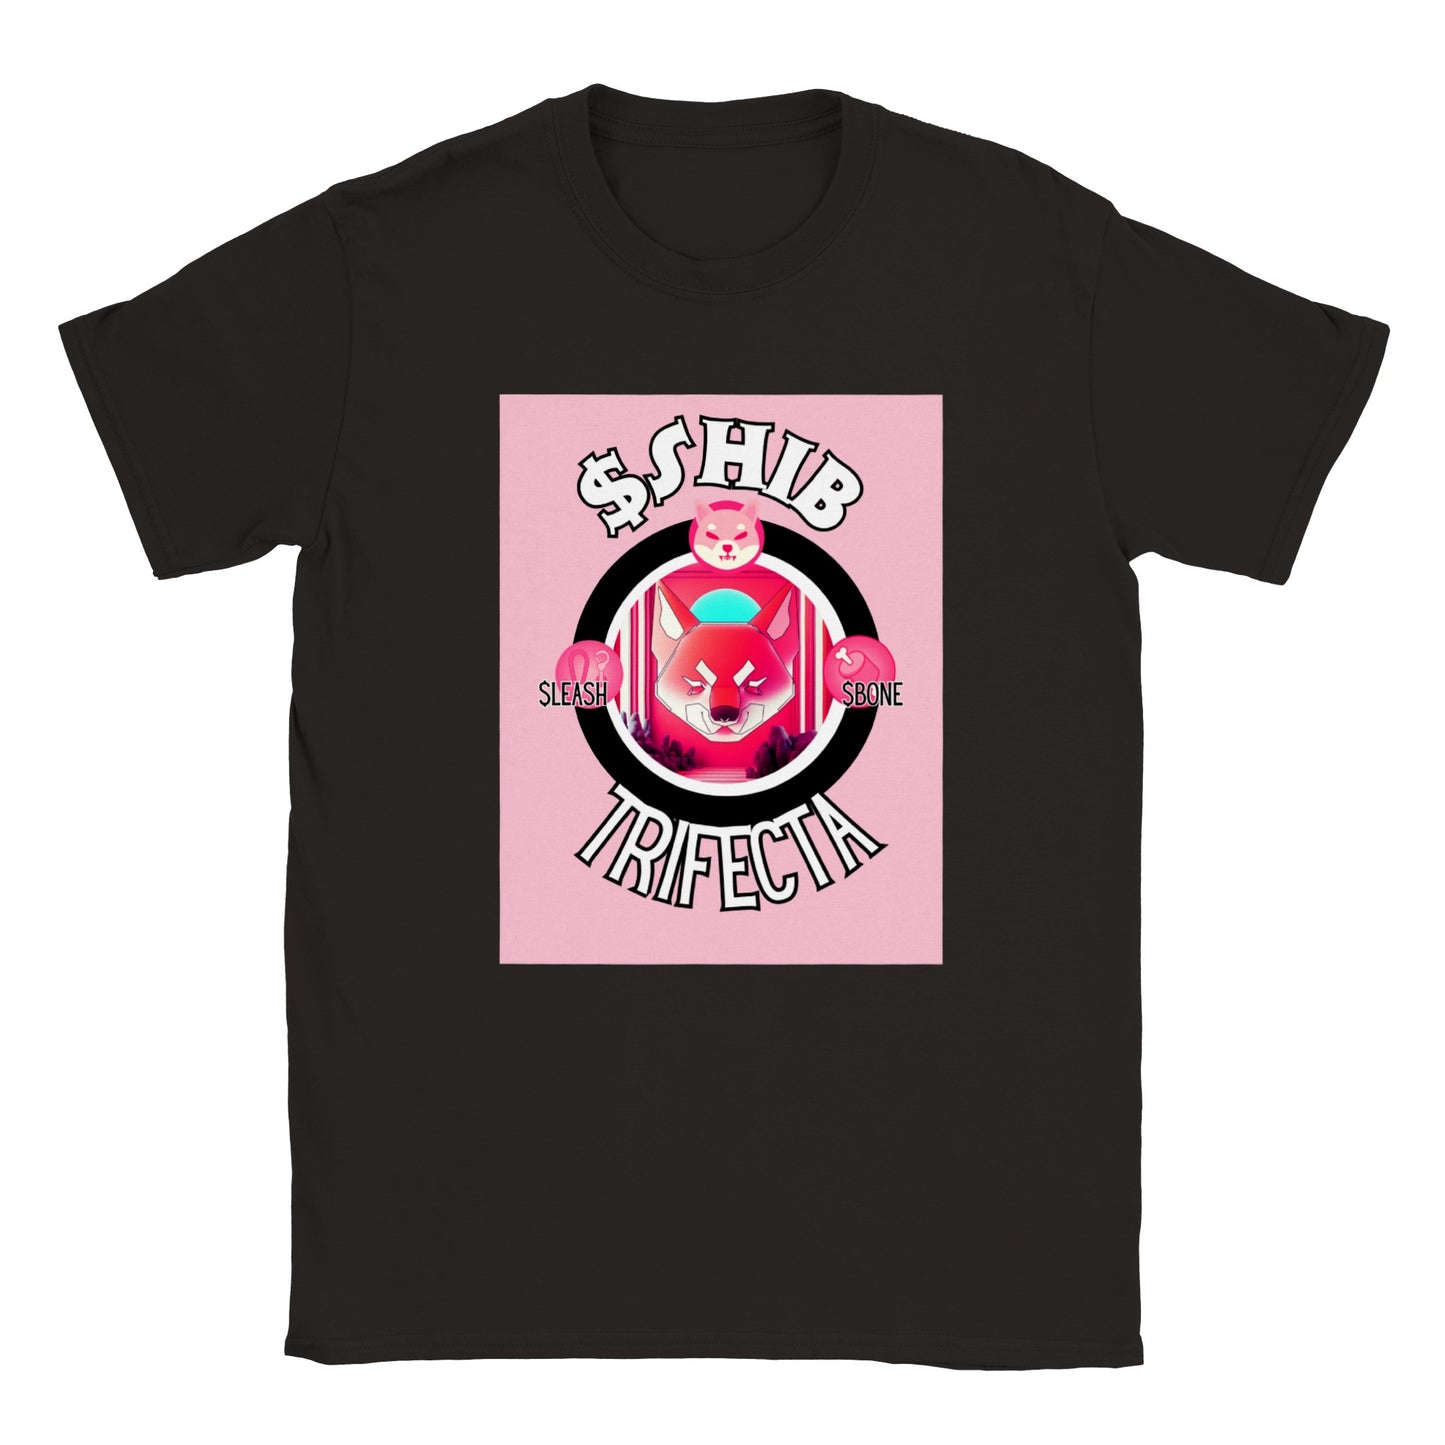 $hib Trifecta Pink Classic Unisex Crewneck T-shirt